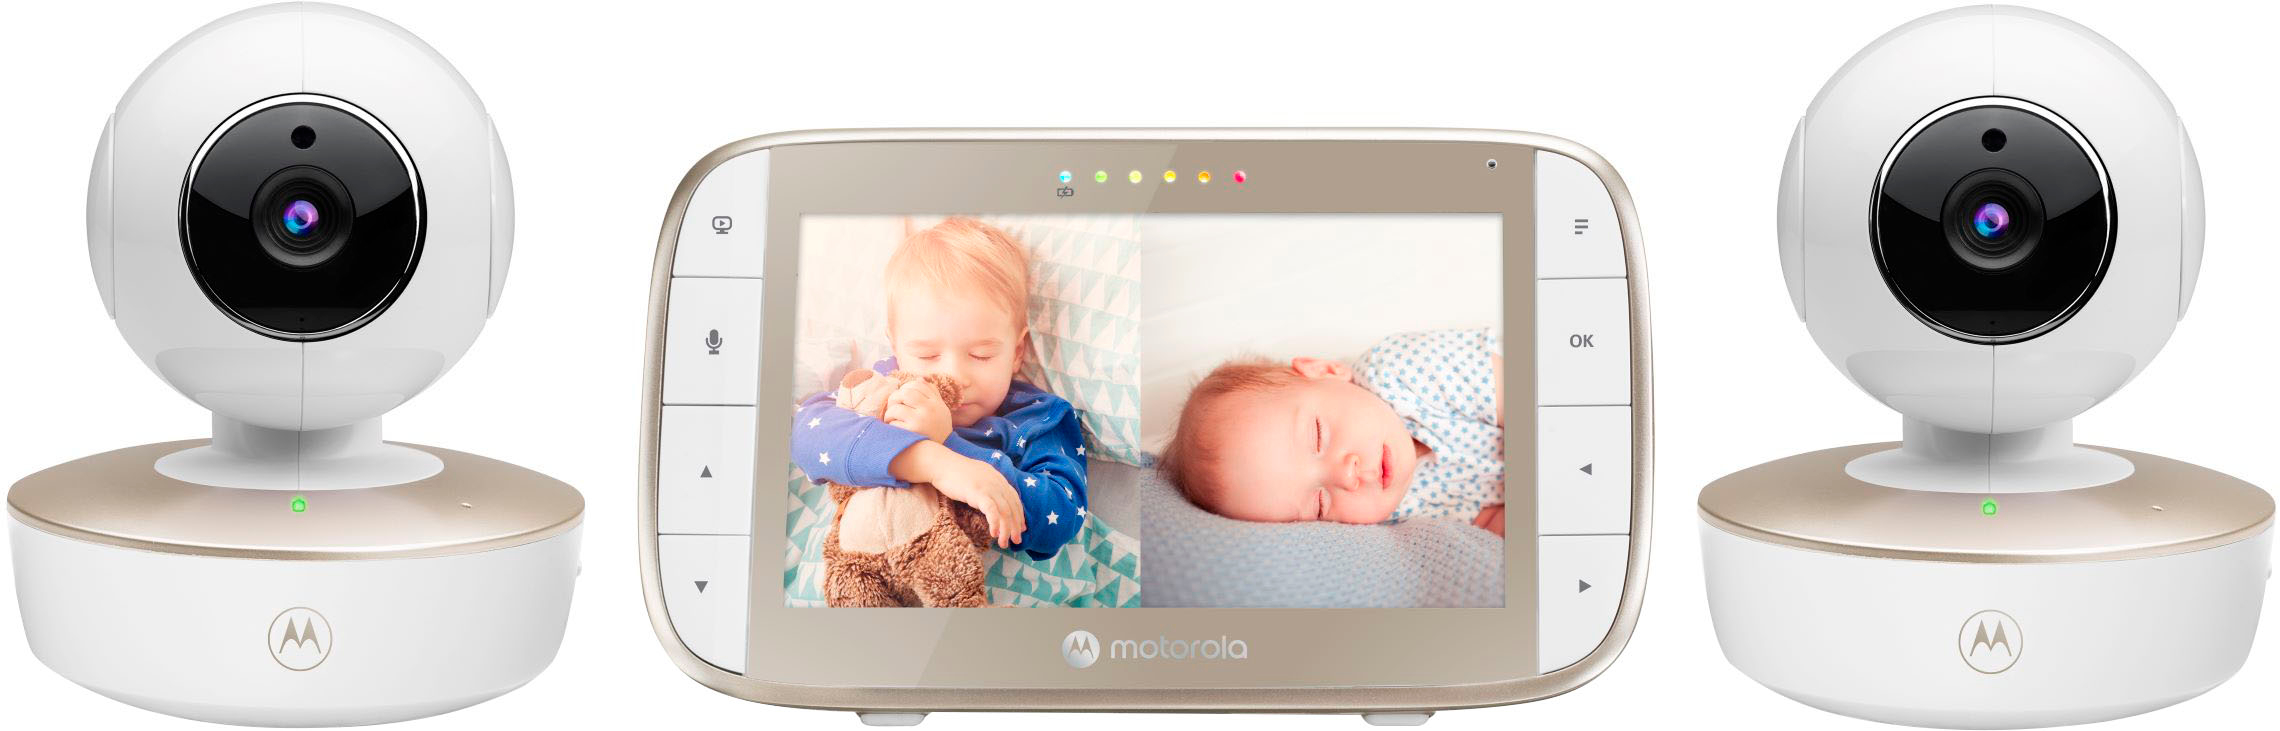 Motorola VM 65 Connect 5 WiFi Video Baby Monitor - 2 Cameras